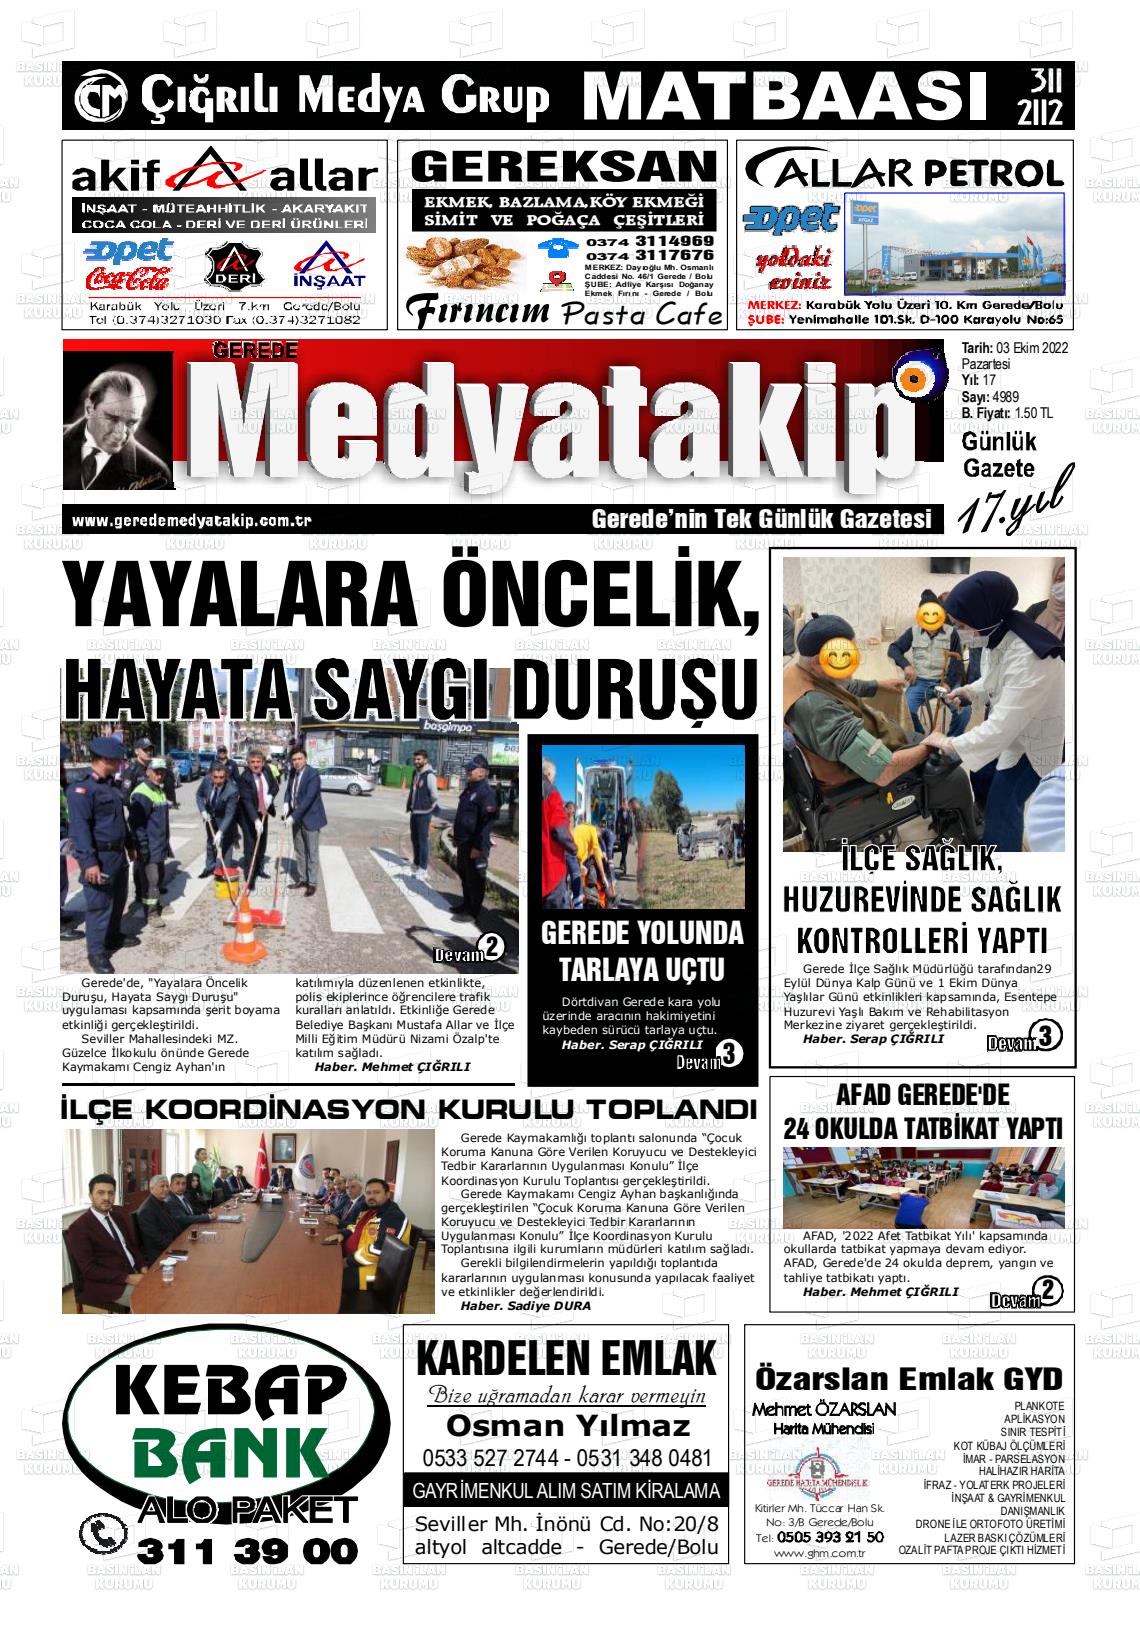 03 Ekim 2022 Gerede Medya Takip Gazete Manşeti